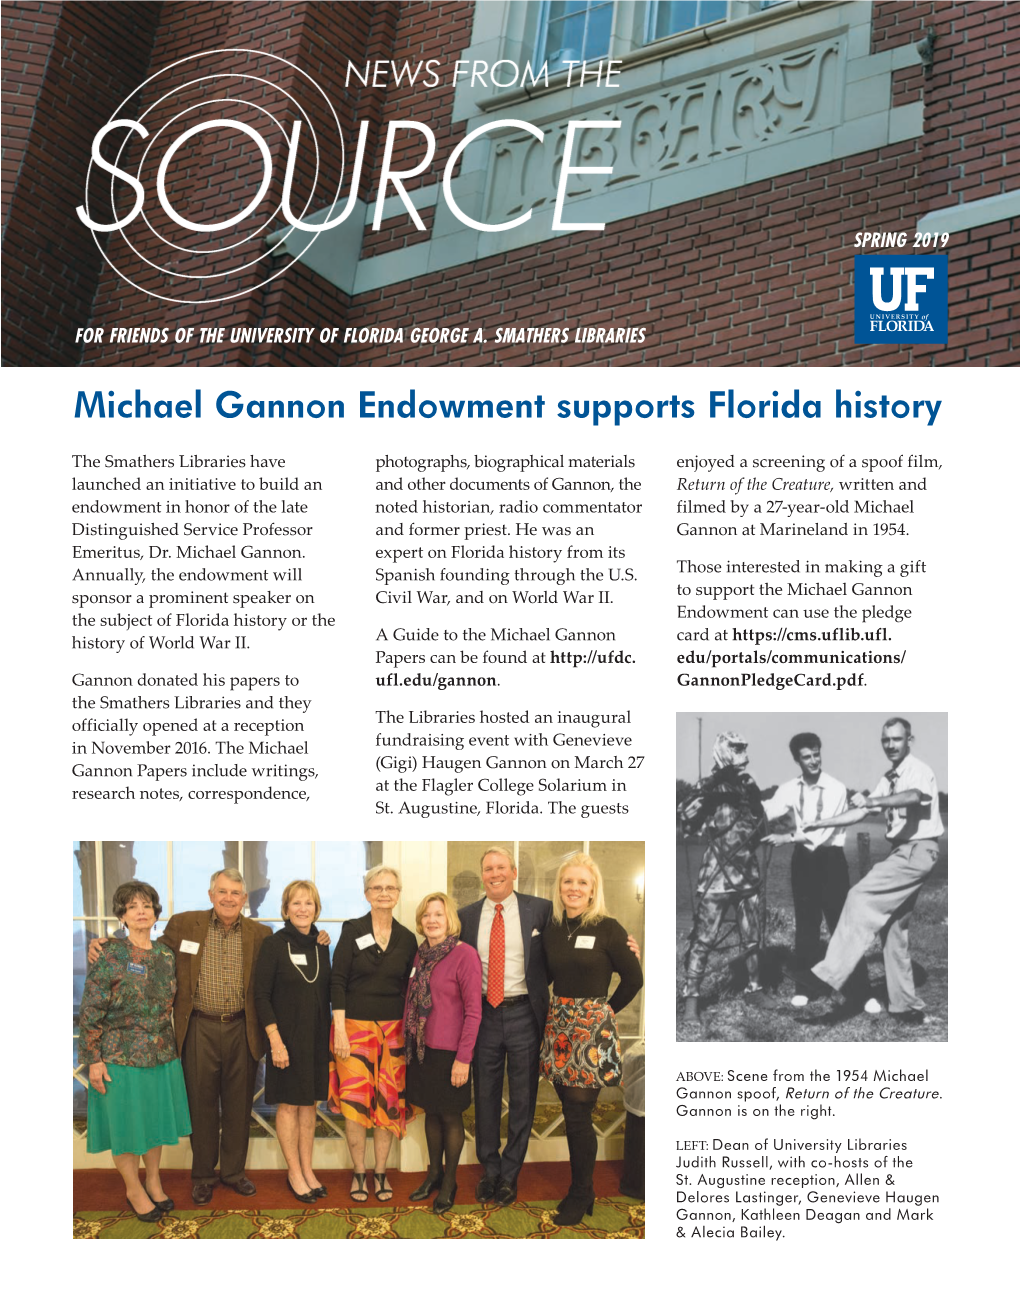 Michael Gannon Endowment Supports Florida History